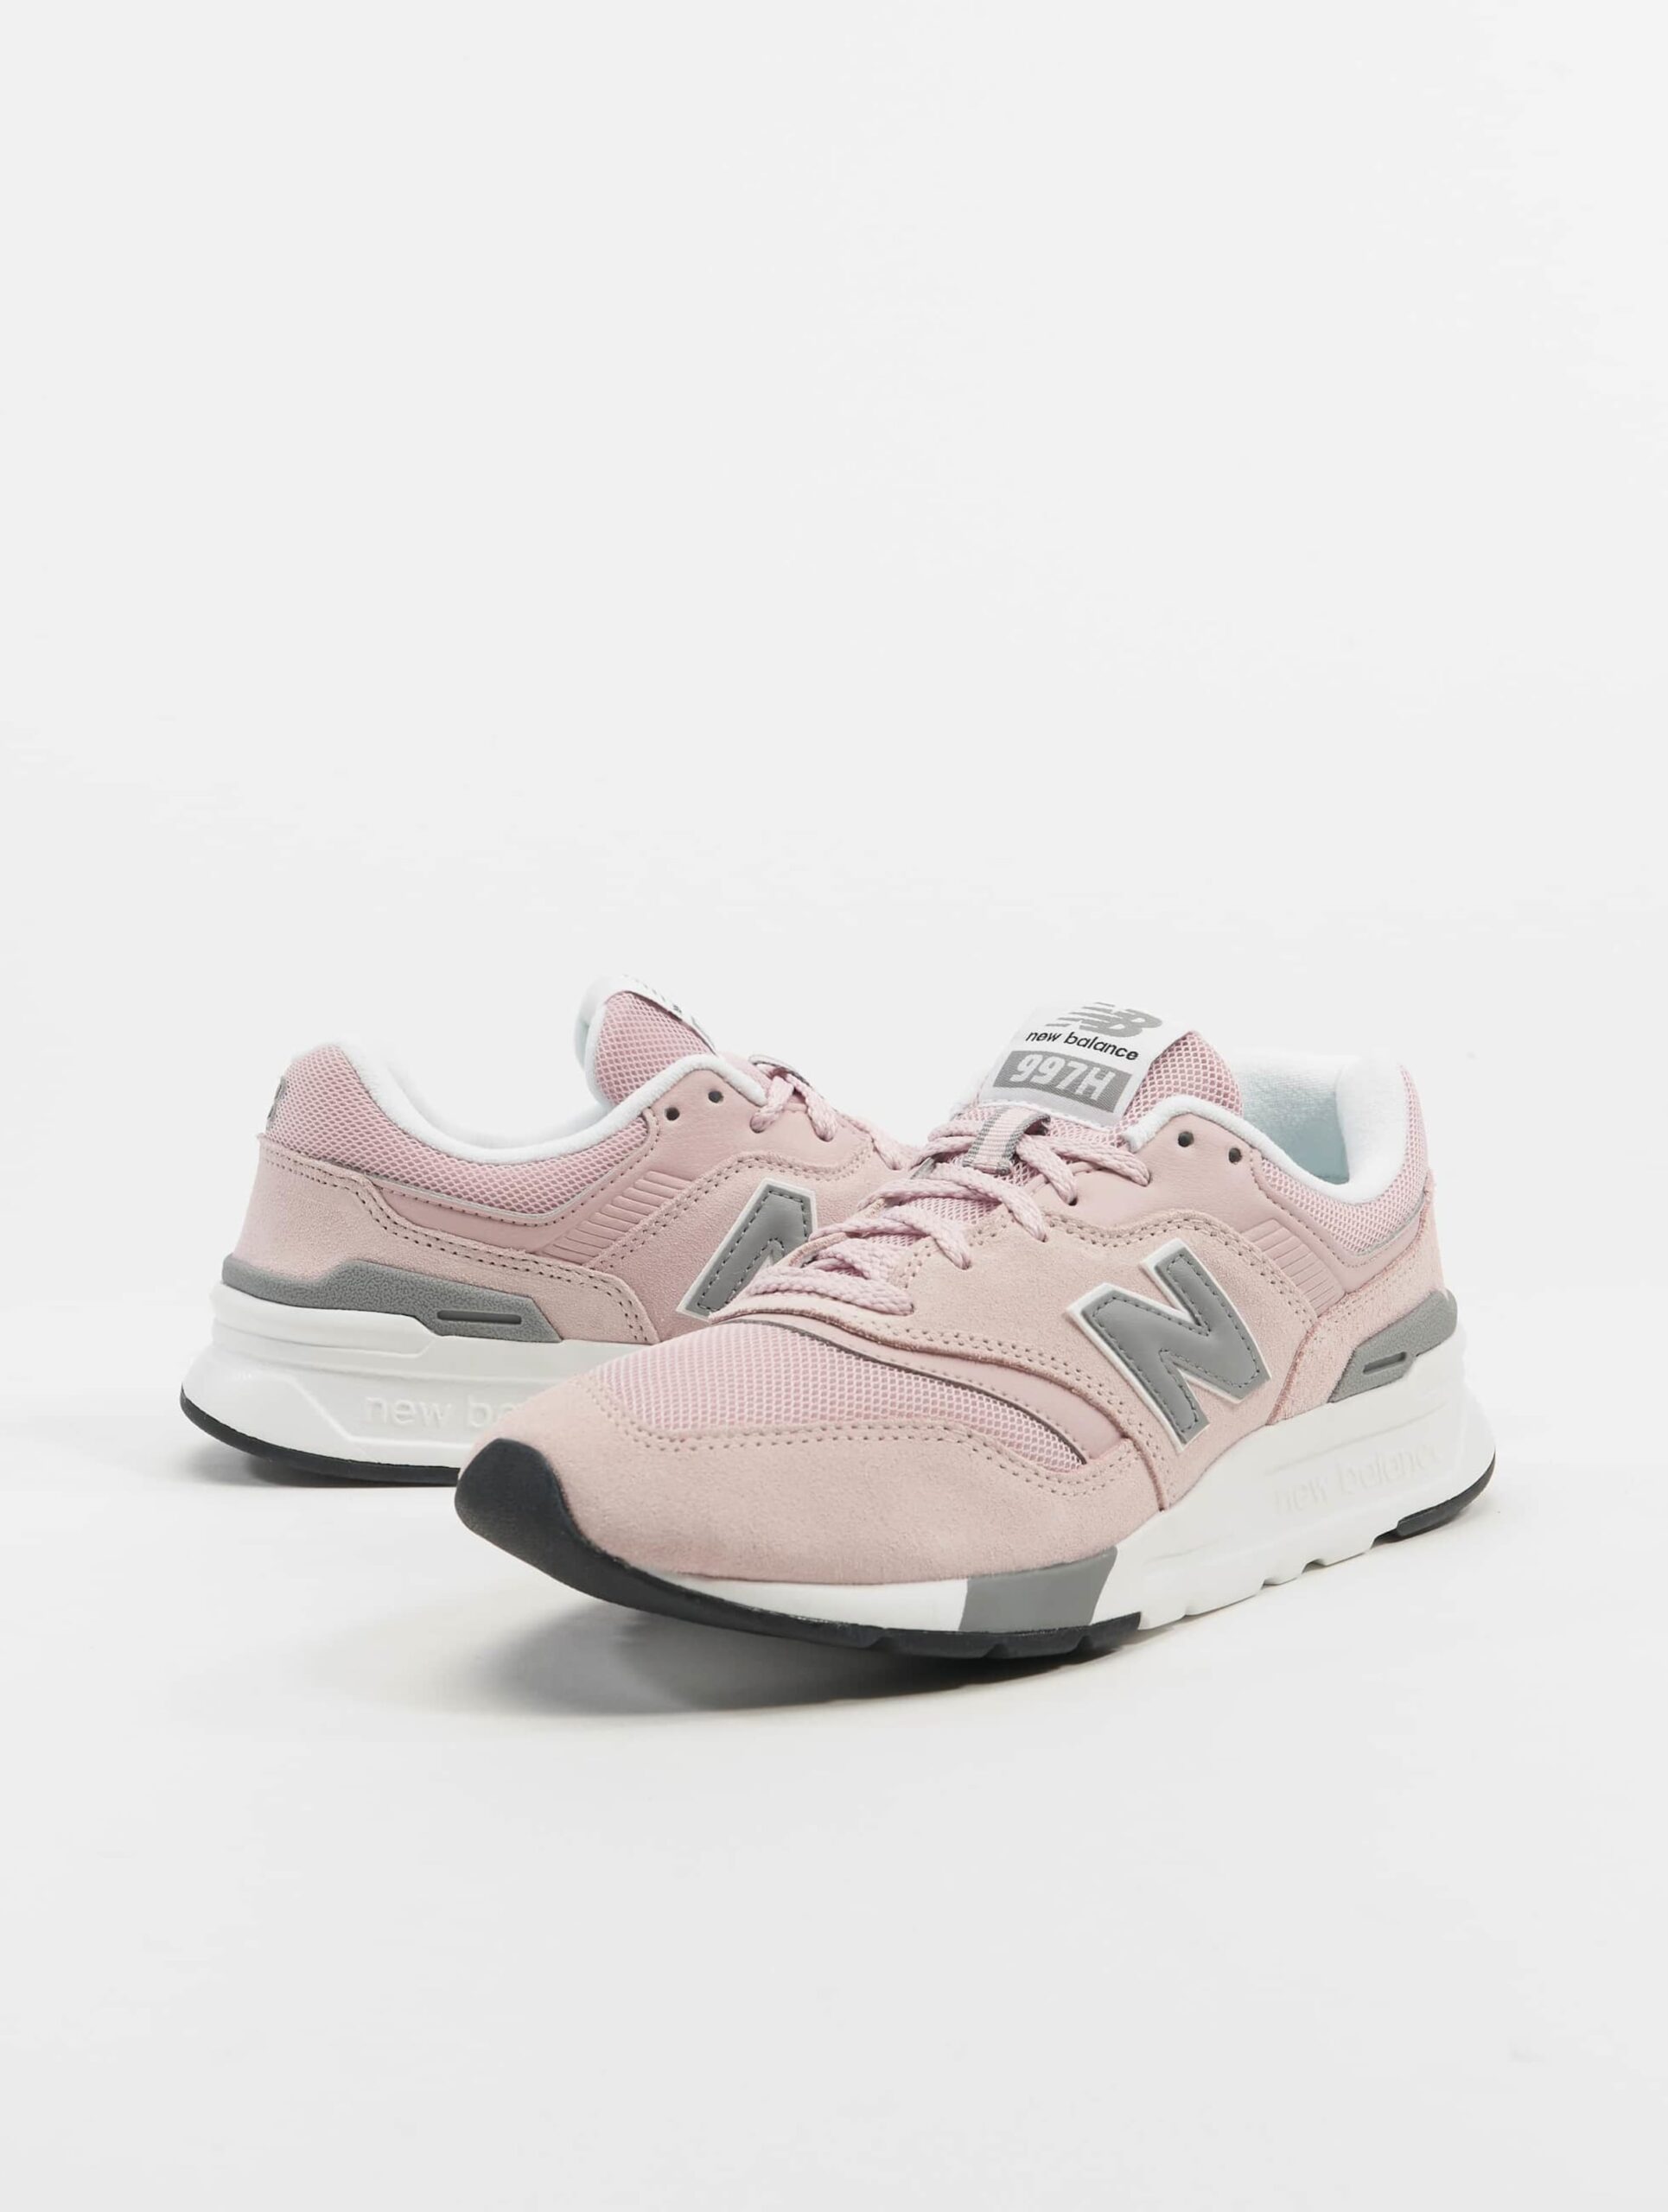 New Balance 997 Schuhe Vrouwen op kleur roze, Maat 36